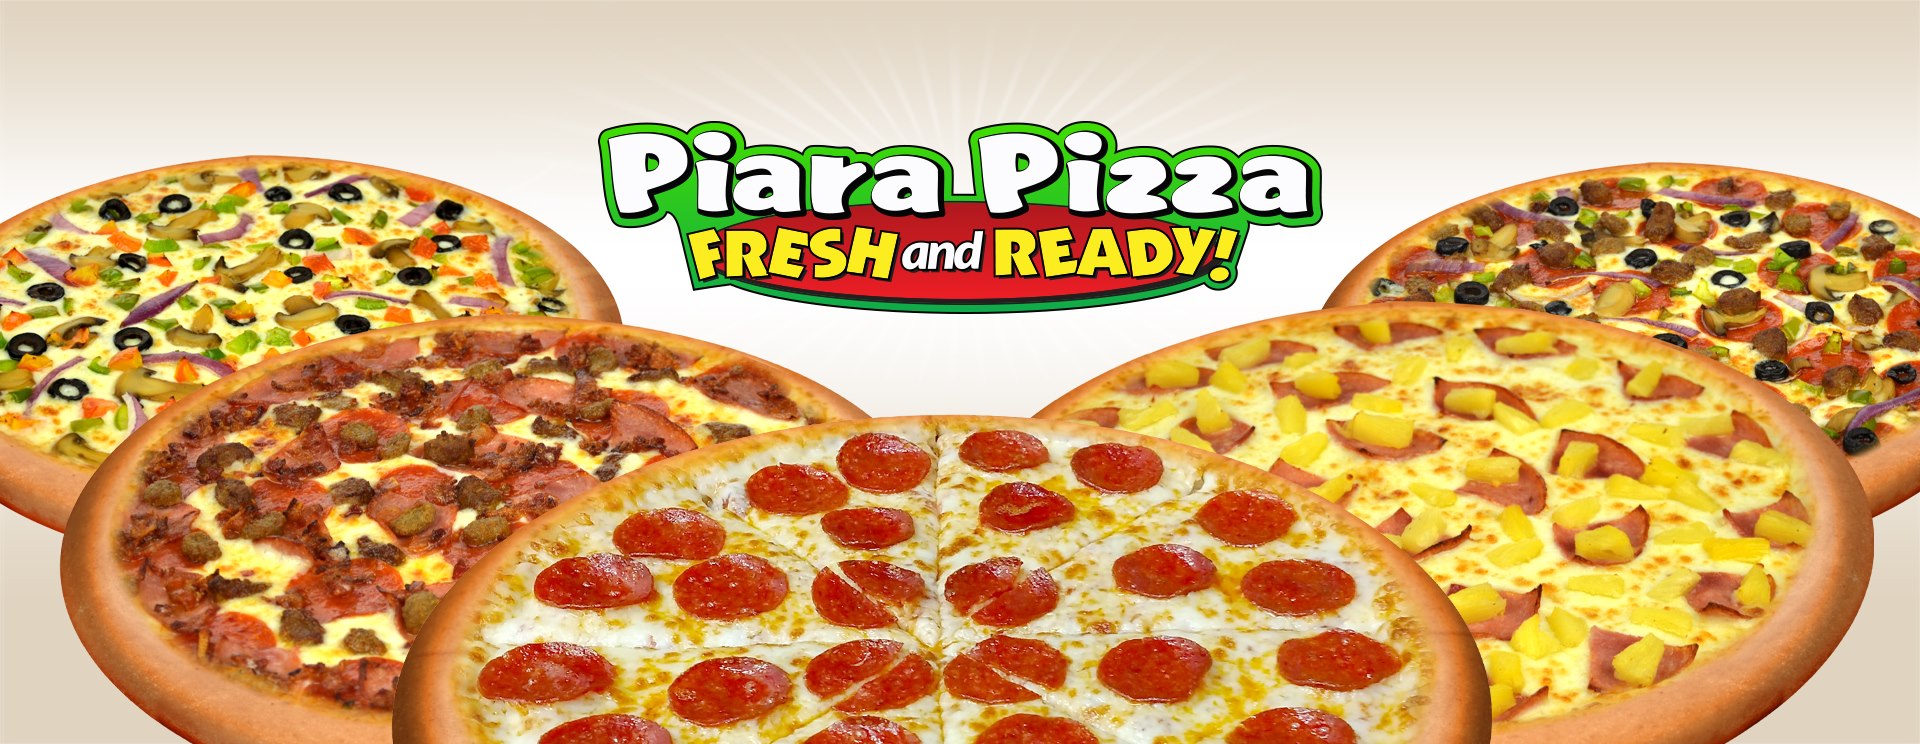 Piara Pizza banner